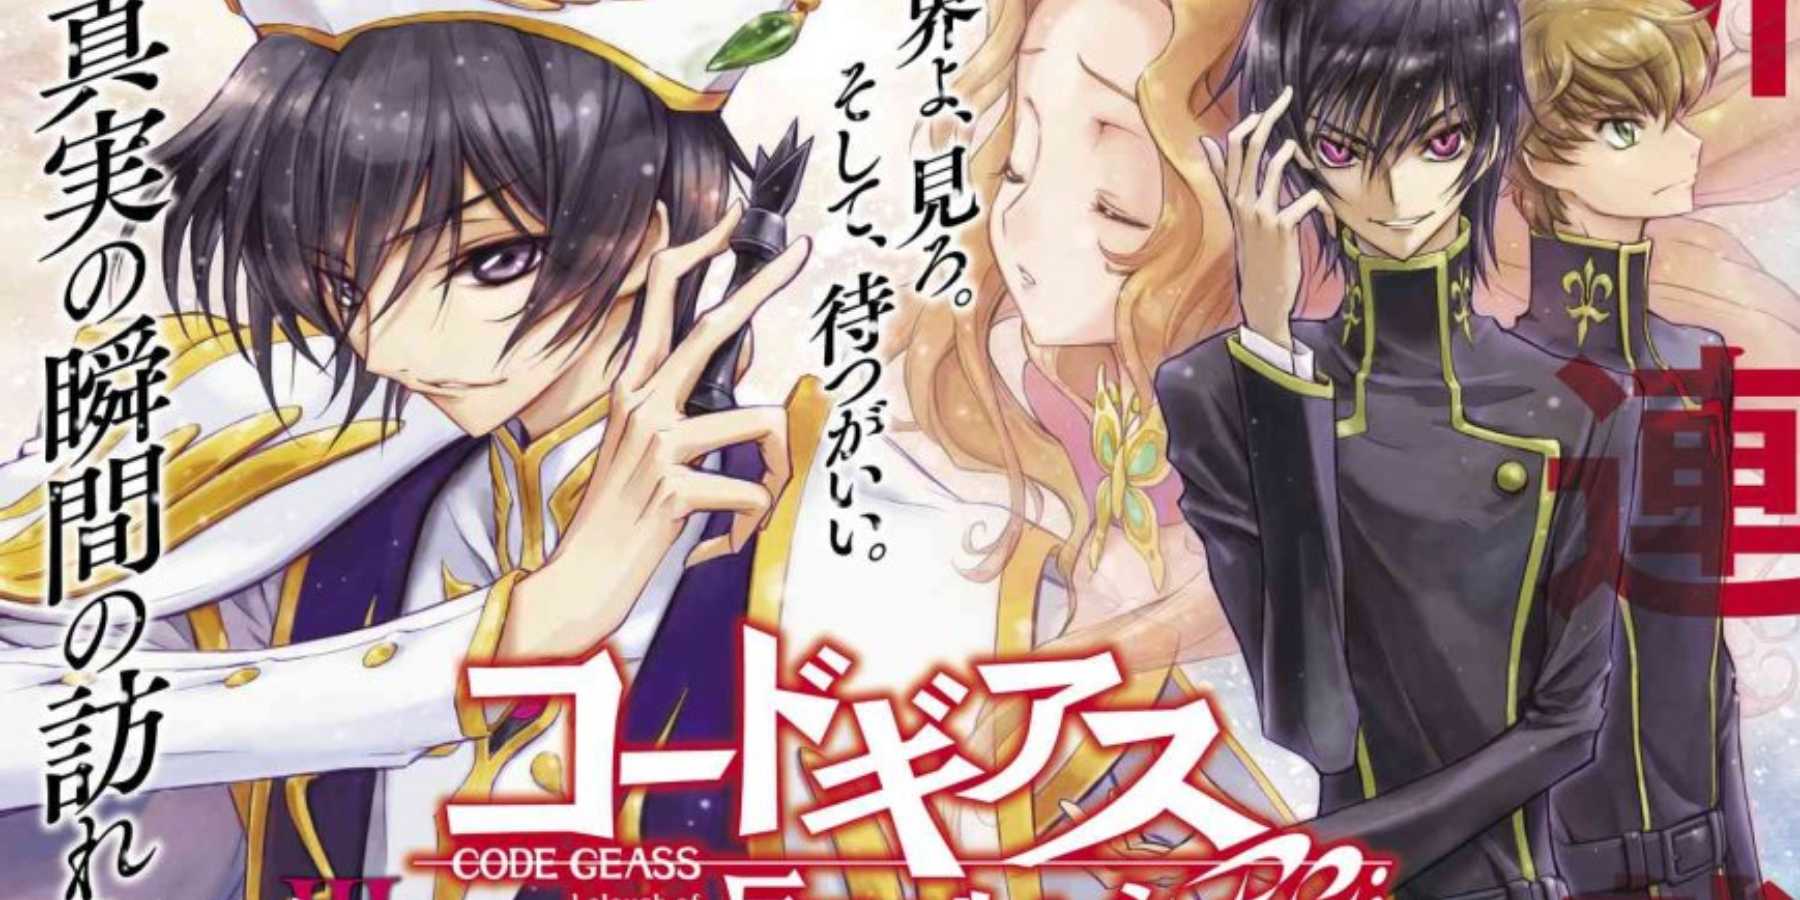 Nuevo manga de Code Geass centrado en Lelouch